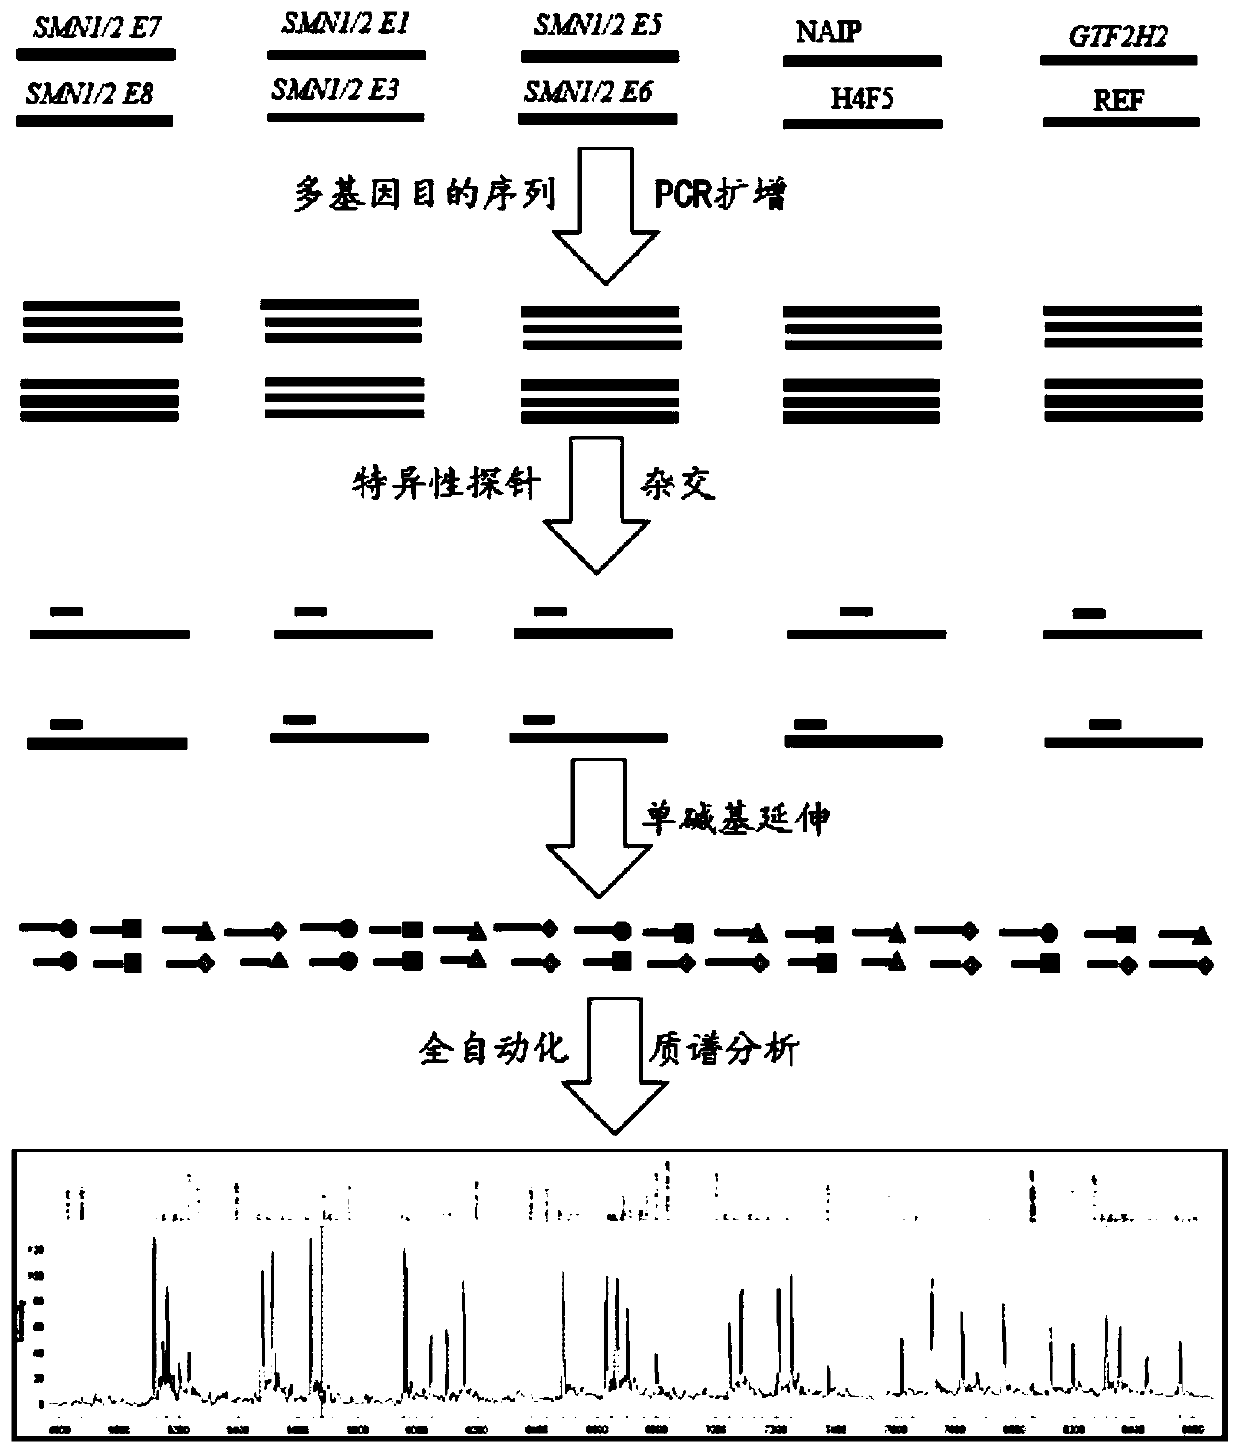 Time-of-flight mass spectrometry nucleic acid analysis method for detecting human spinal muscular atrophy gene mutation